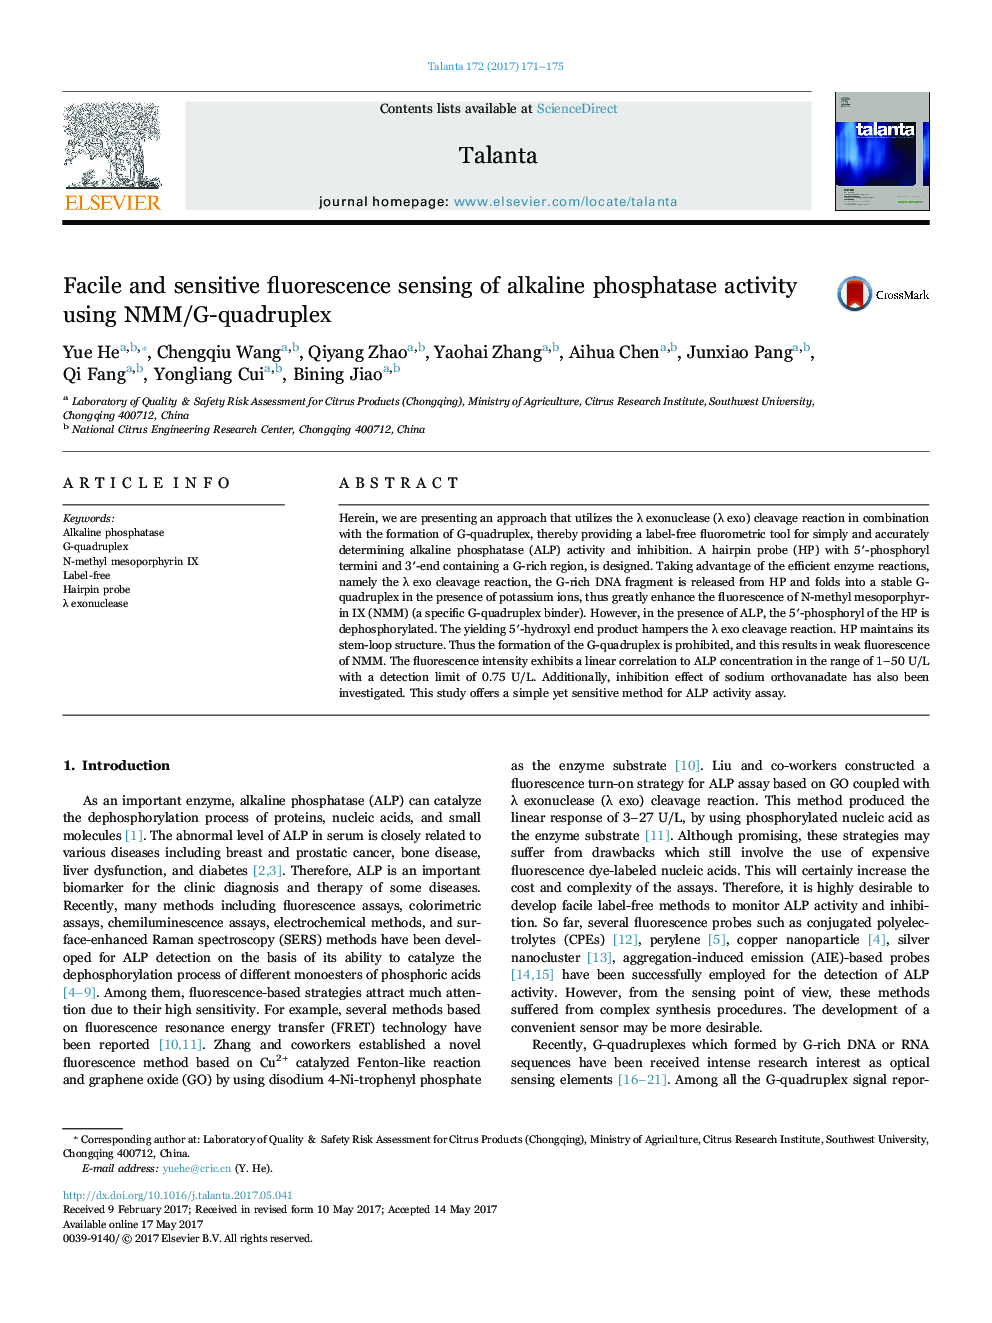 Facile and sensitive fluorescence sensing of alkaline phosphatase activity using NMM/G-quadruplex